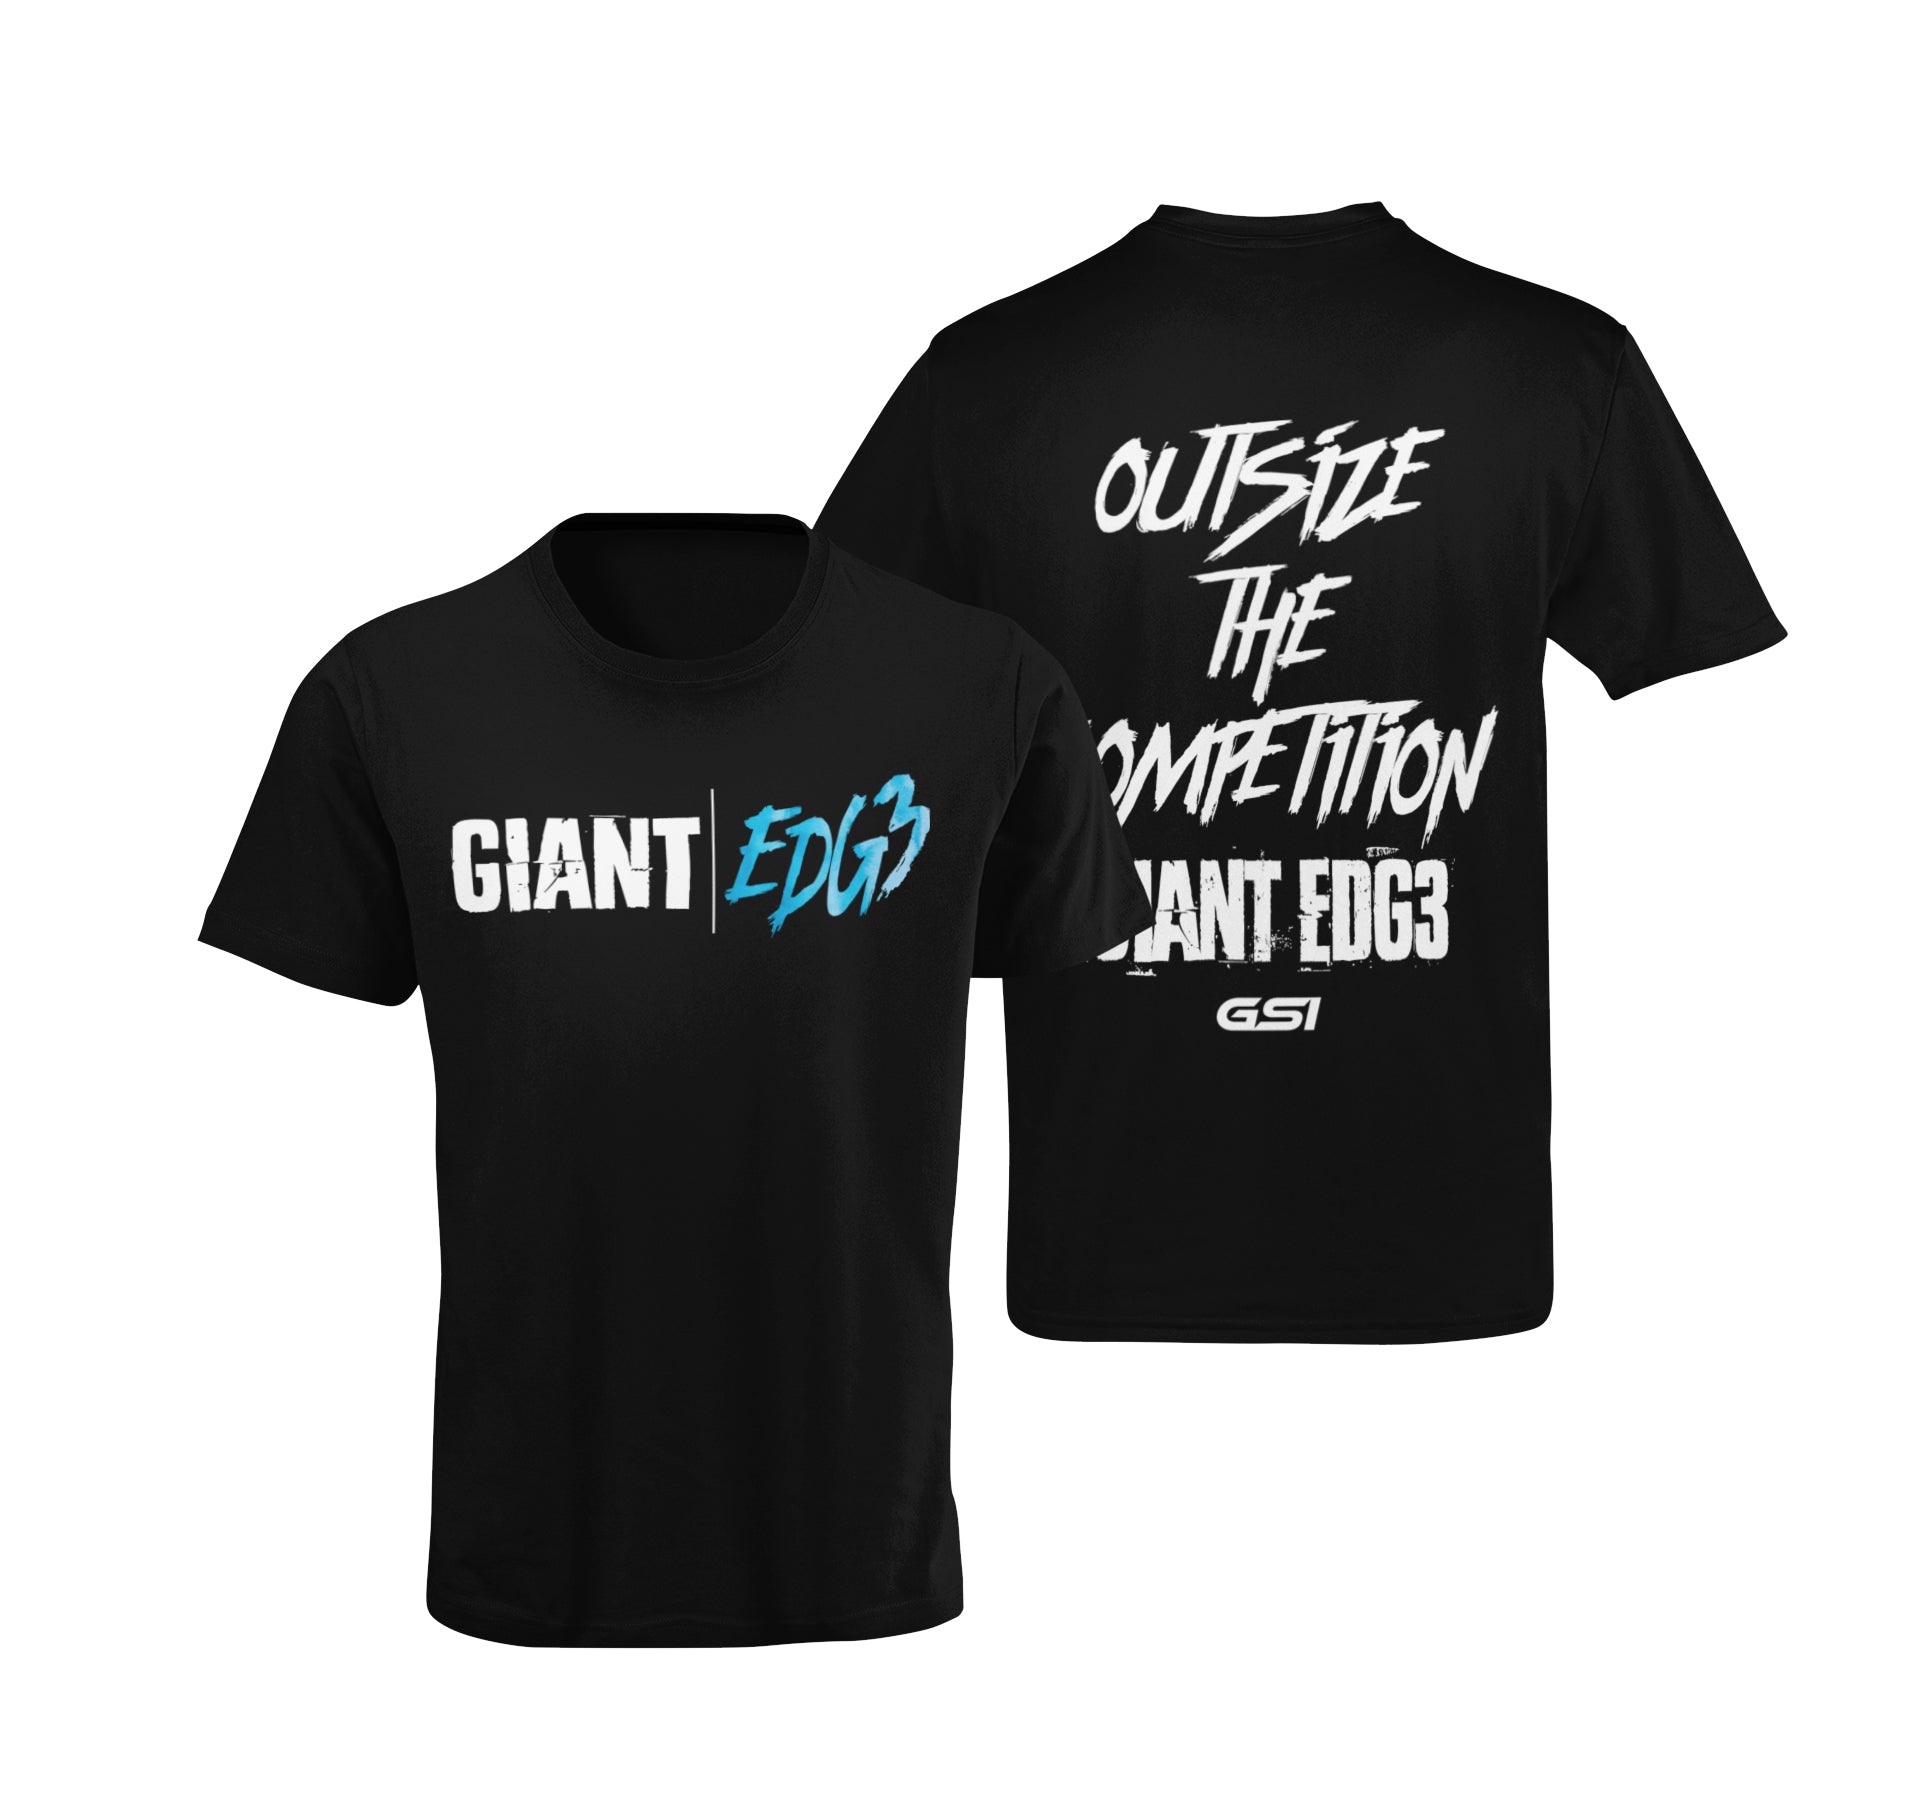 Giant Edge t shirt black